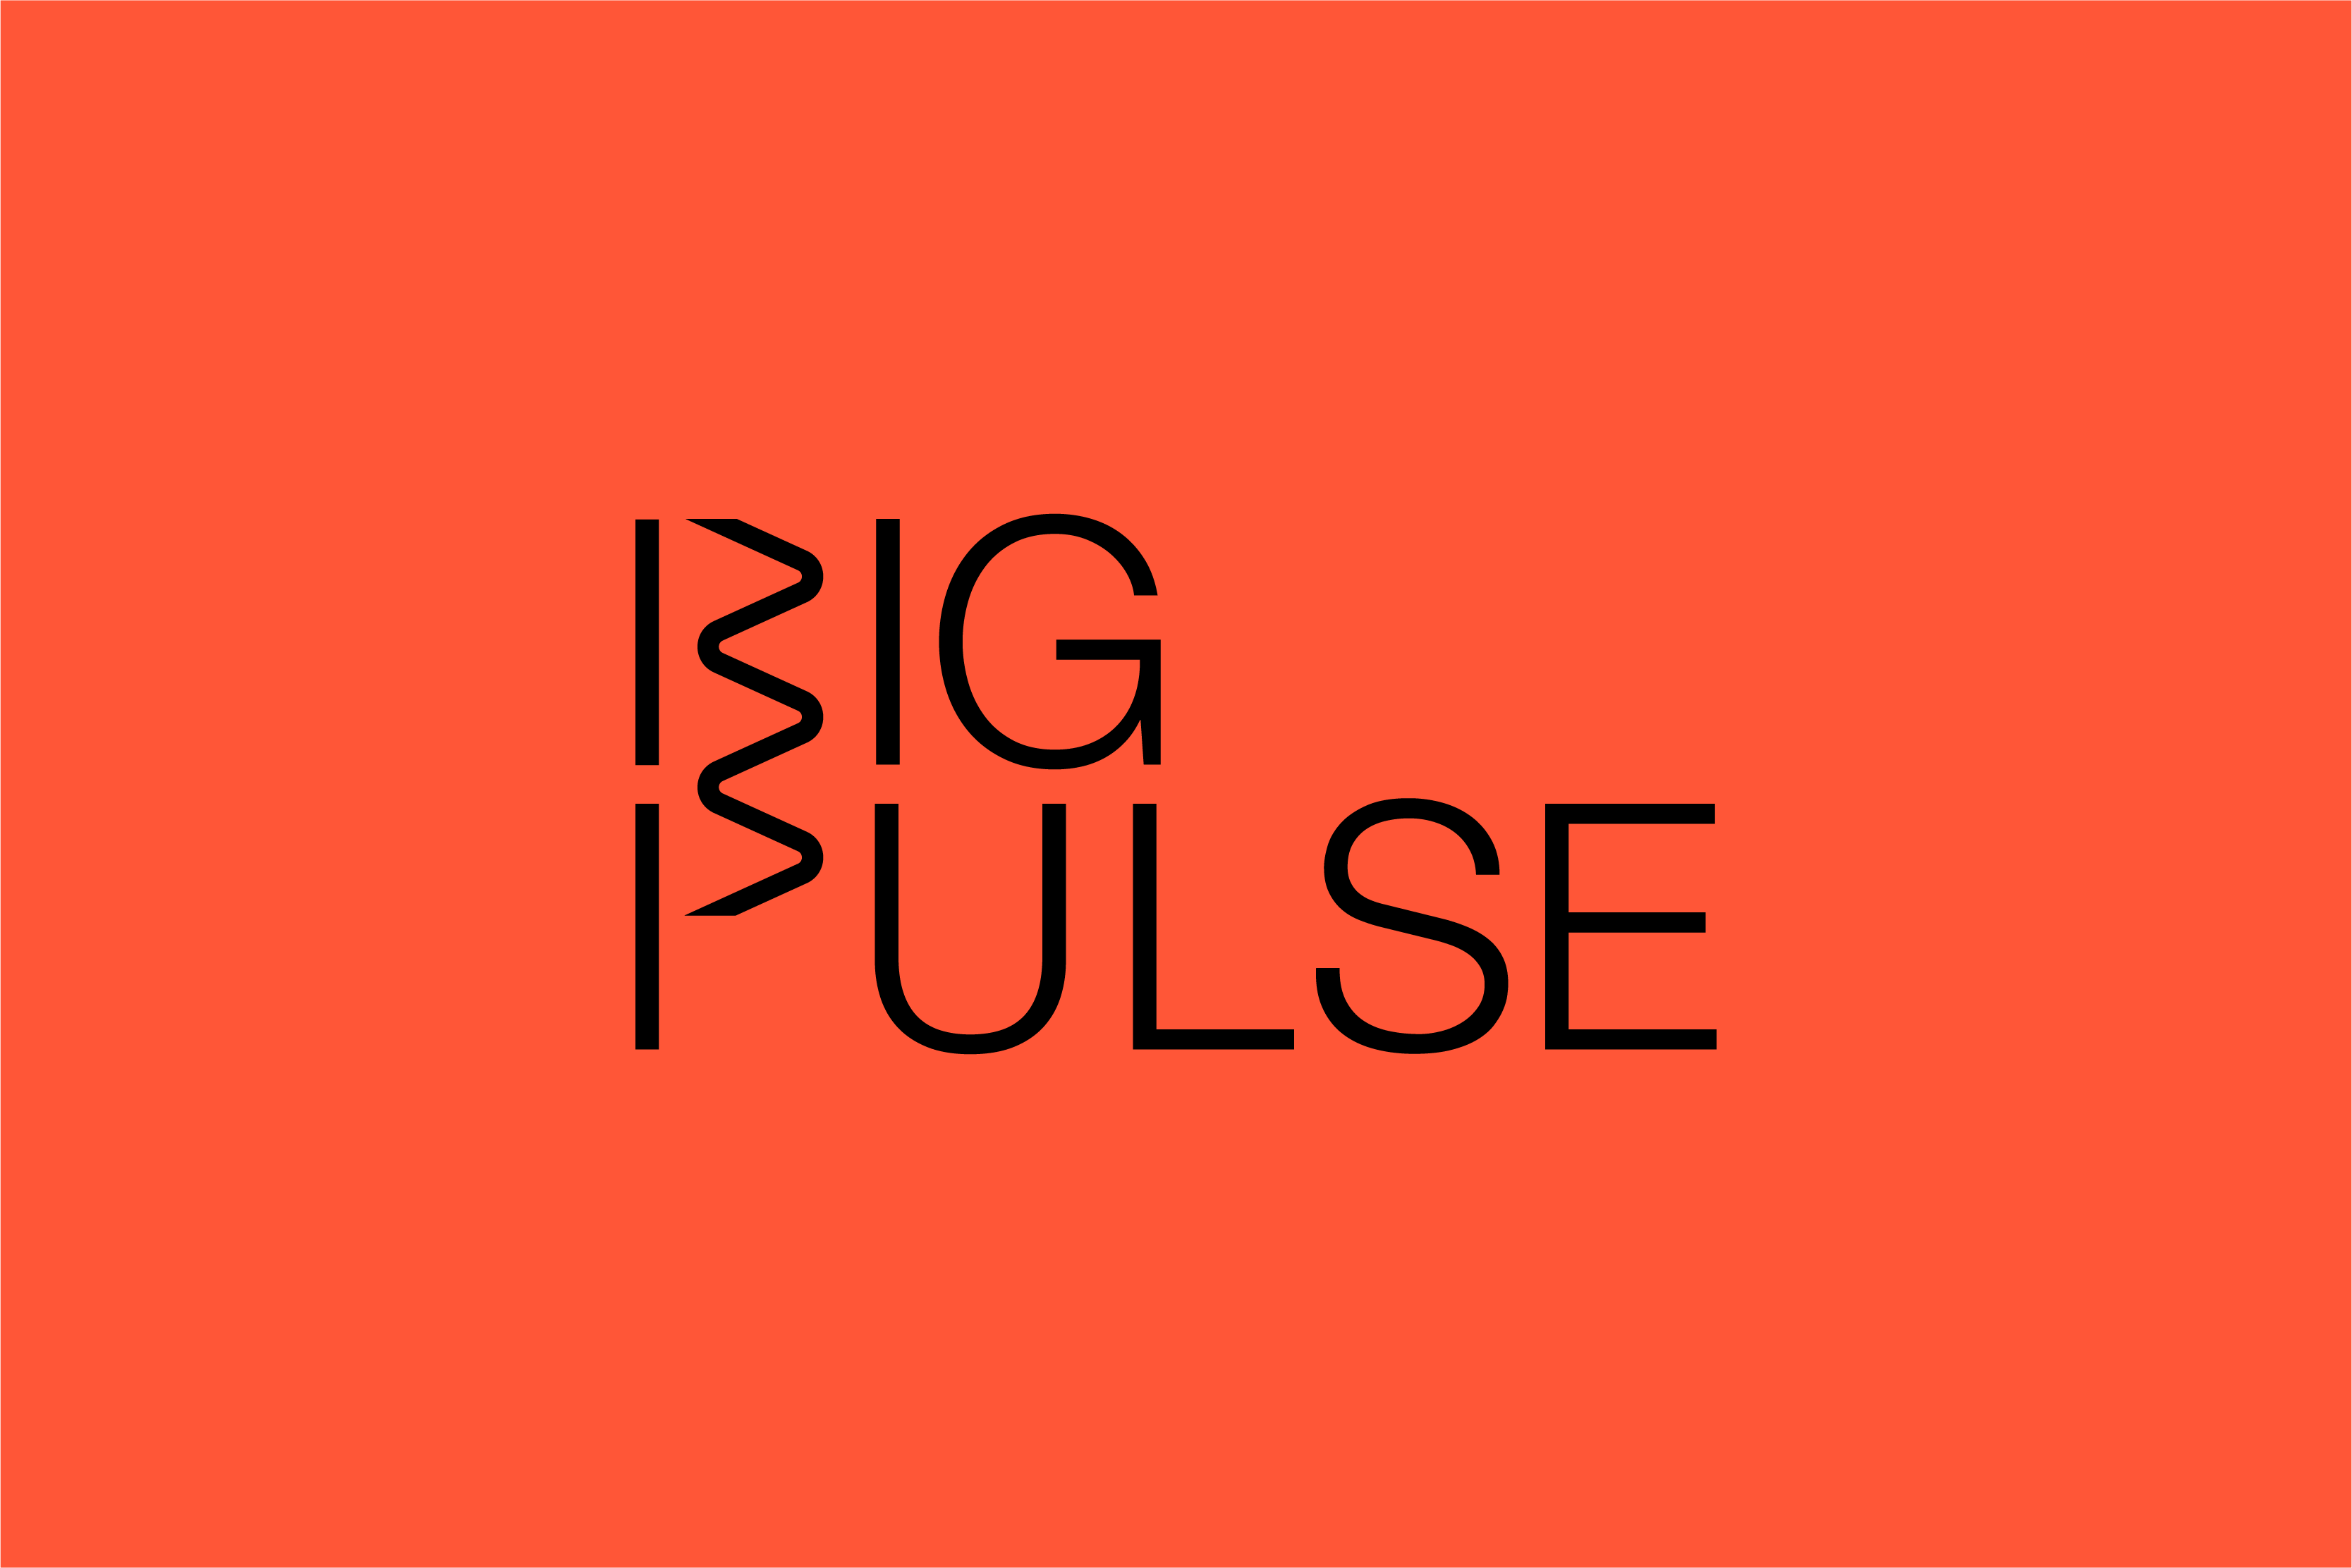 Pulse Logo Maker | Create Pulse logos in minutes